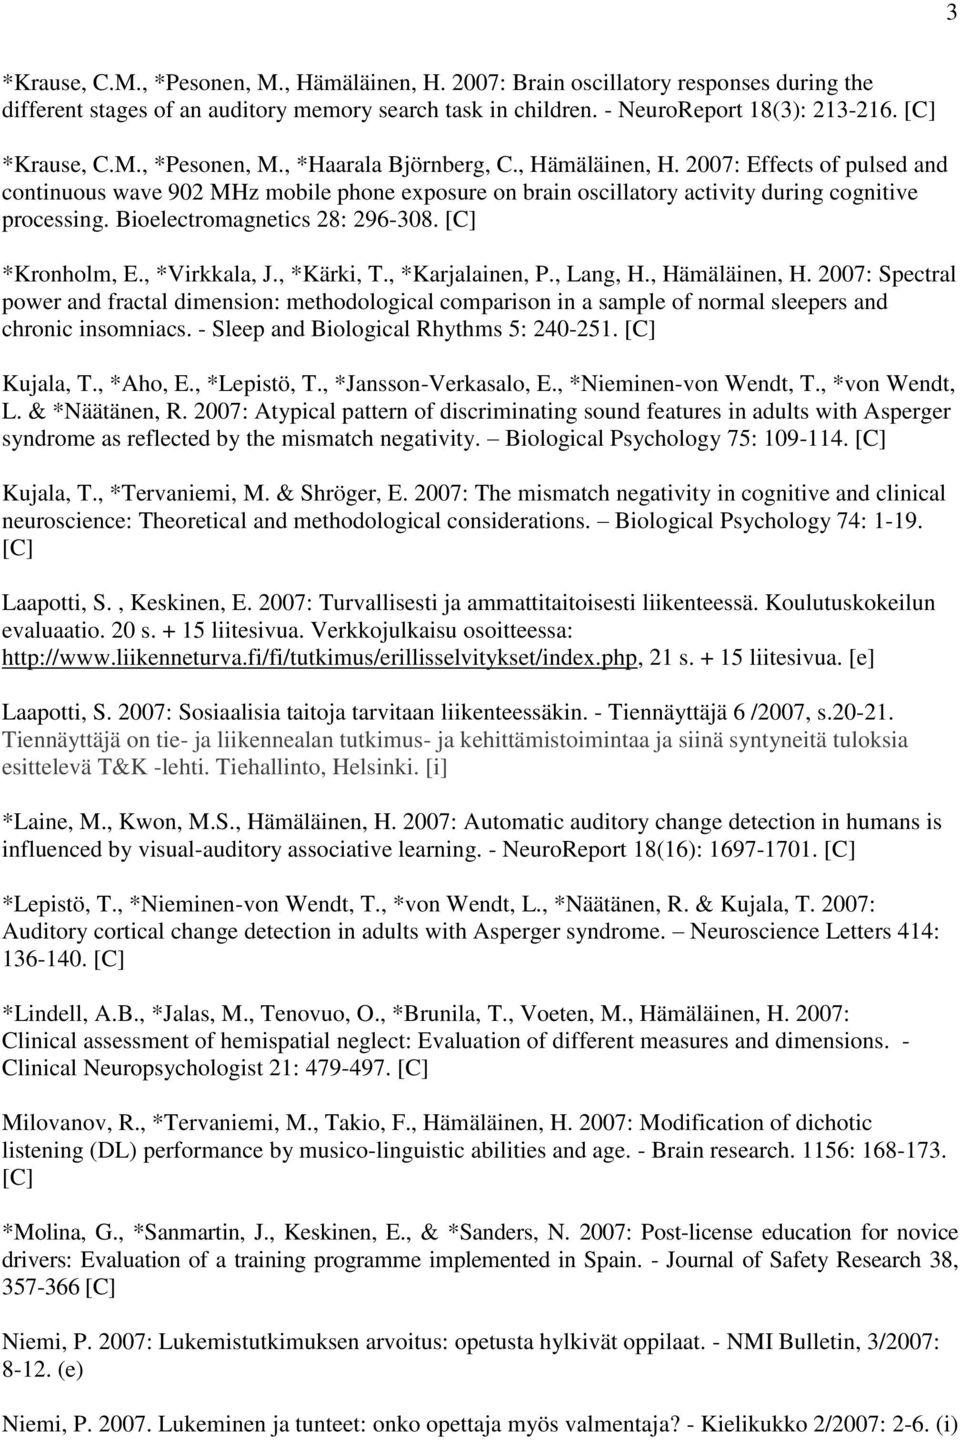 , *Virkkala, J., *Kärki, T., *Karjalainen, P., Lang, H., Hämäläinen, H. 2007: Spectral power and fractal dimension: methodological comparison in a sample of normal sleepers and chronic insomniacs.